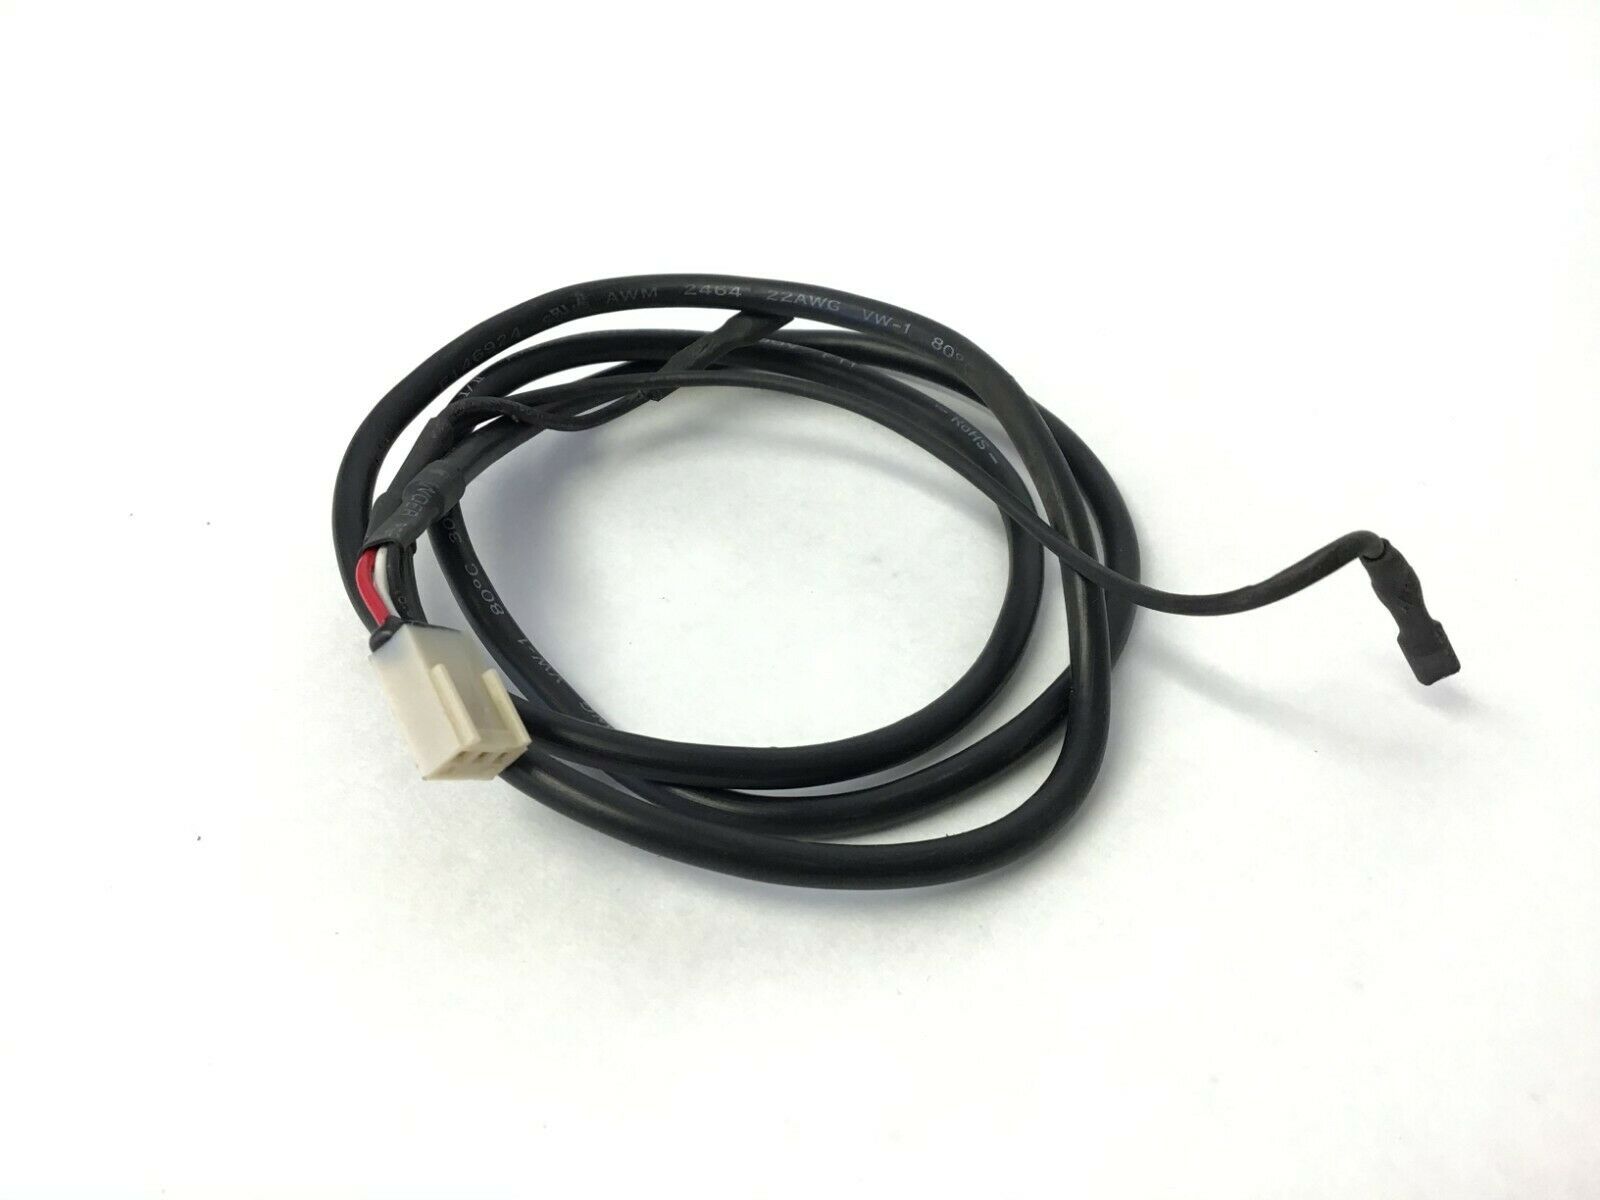 True Fitness XLC900 Elliptical Hand Sensor Wire Harness (Used)